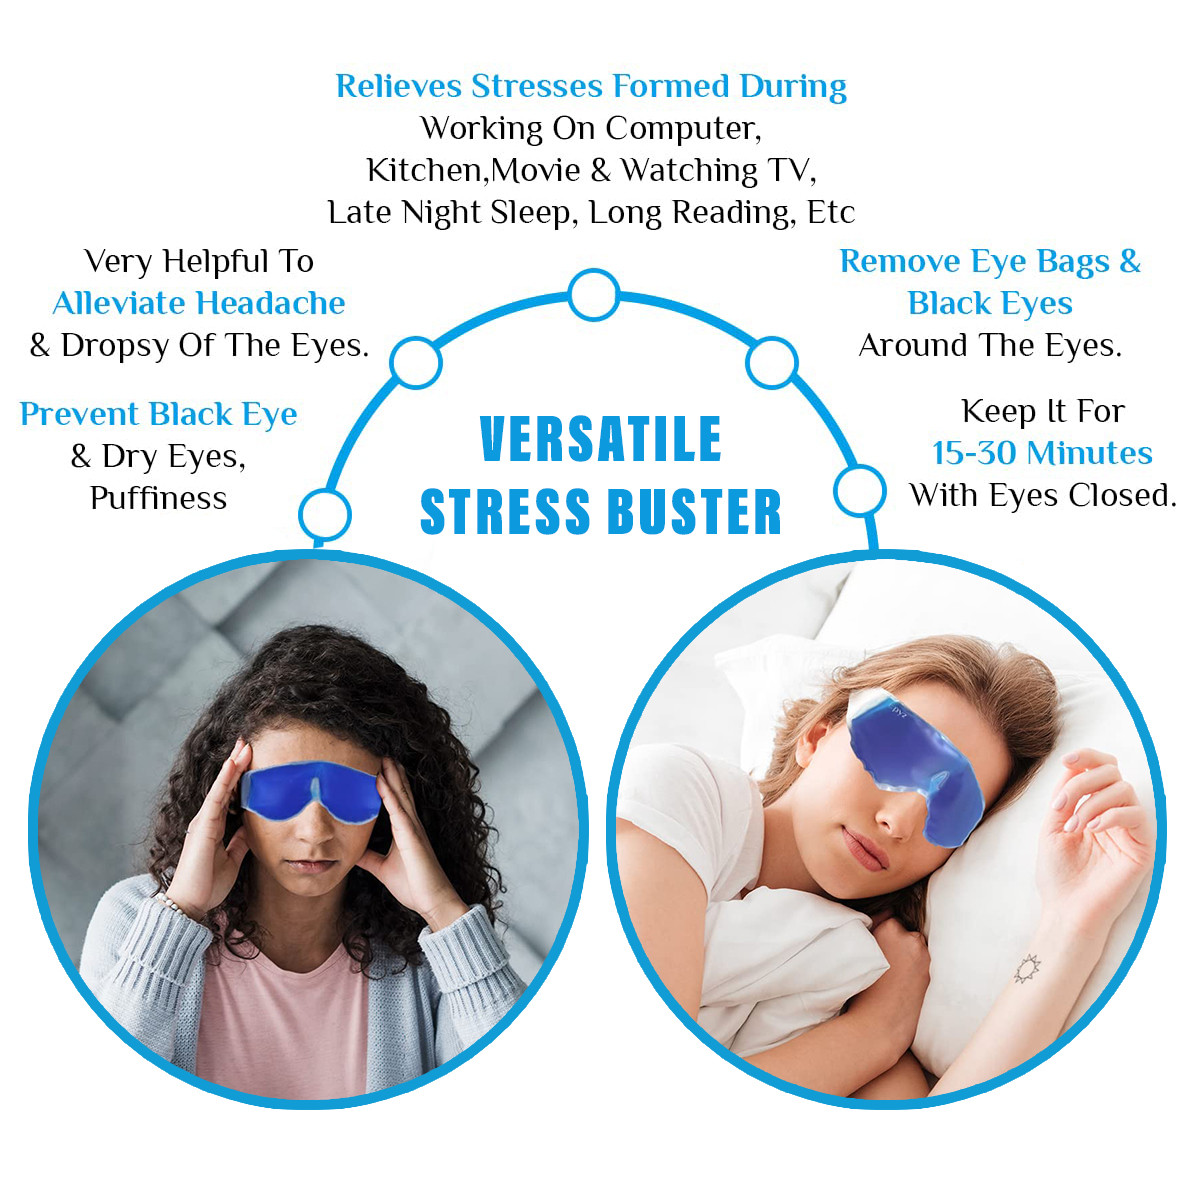 Kuber Industries Eye Mask | Eye Mask with Cooling Gel | Eye Mask for Dark Circles | Eye Cooling Gel Pad | Reusable Eye Mask | Pain Relief | Eye Cooling Gel | Blue